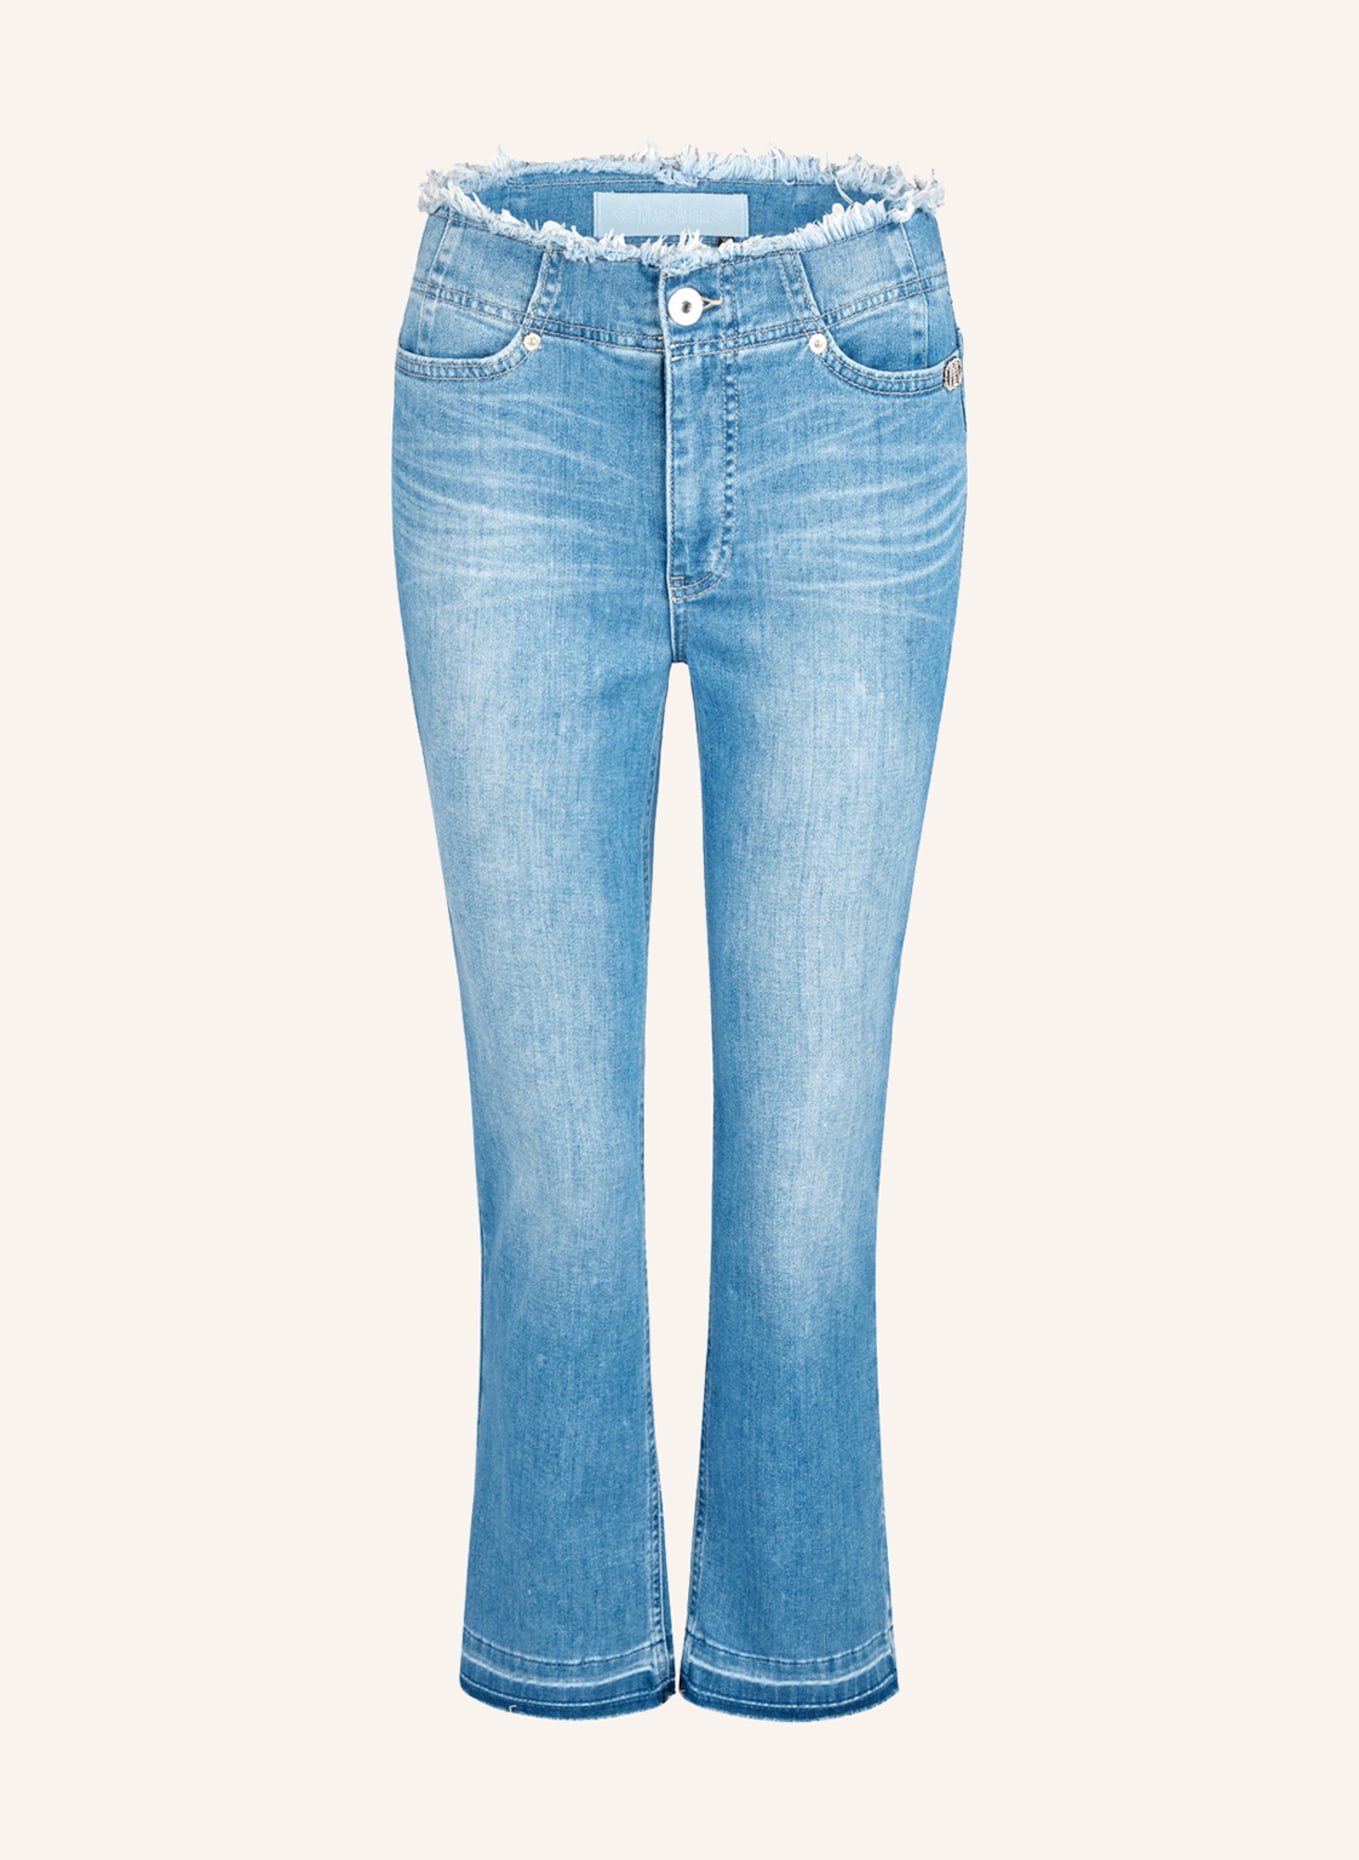 MARC AUREL Jeans, Farbe: BLAU (Bild 1)